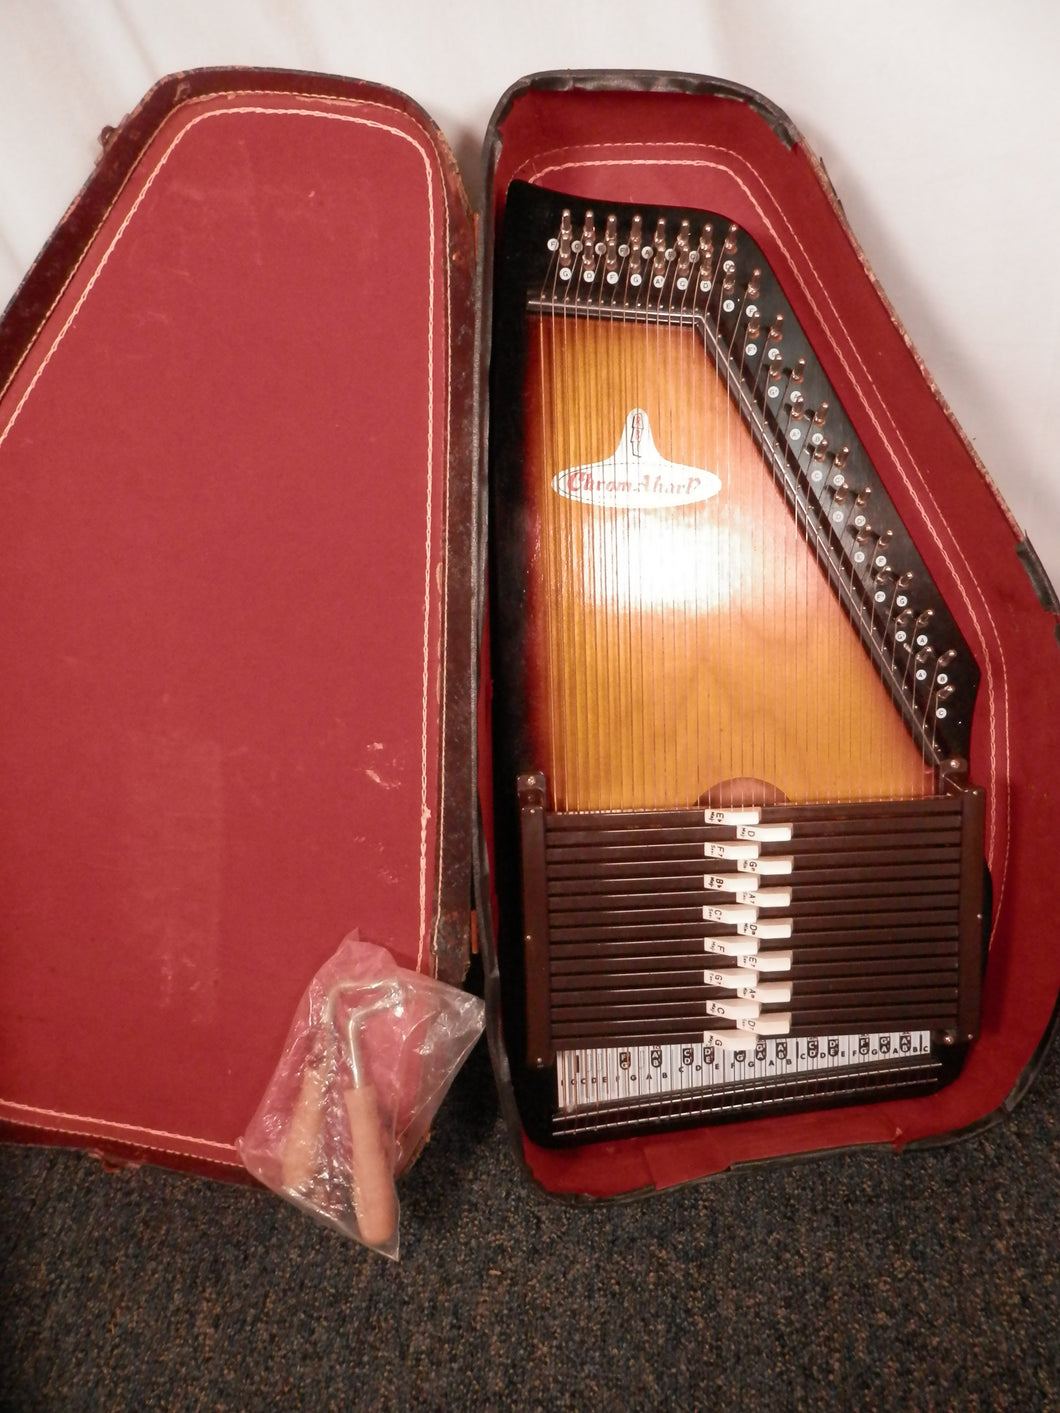 Rhythm Band Chroma Harp Sunburst AutoHarp with chipboard case + tuning keys Auto-Harp Auto Harp vintage